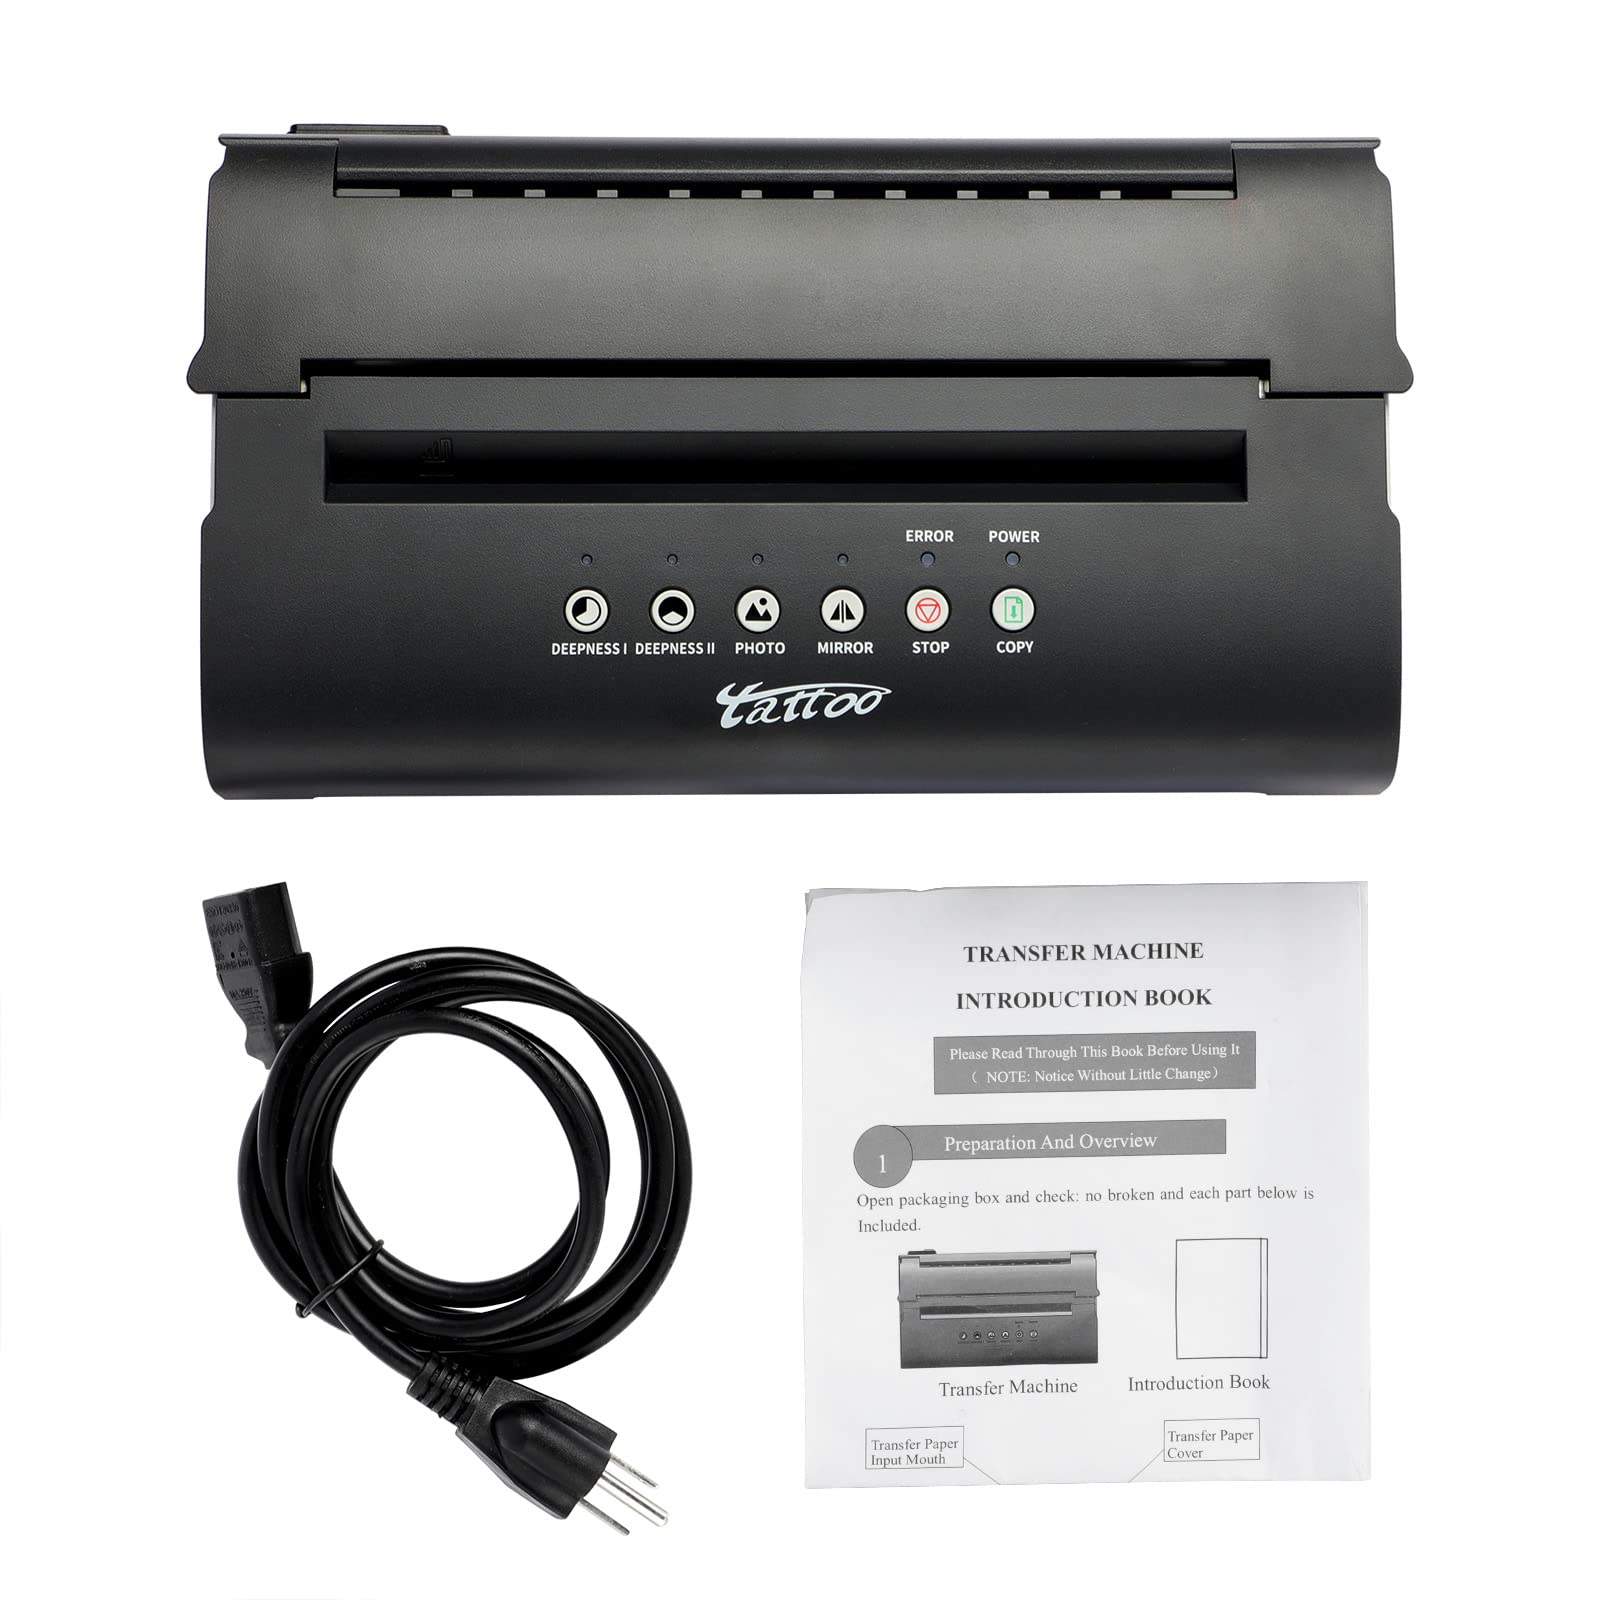 Solong Tattoo Stencil Printer Thermal Transfer Machine Copier Printer, Machine Copier Printer Tattoo Transfer Machine Supply Black 2022 Update T105